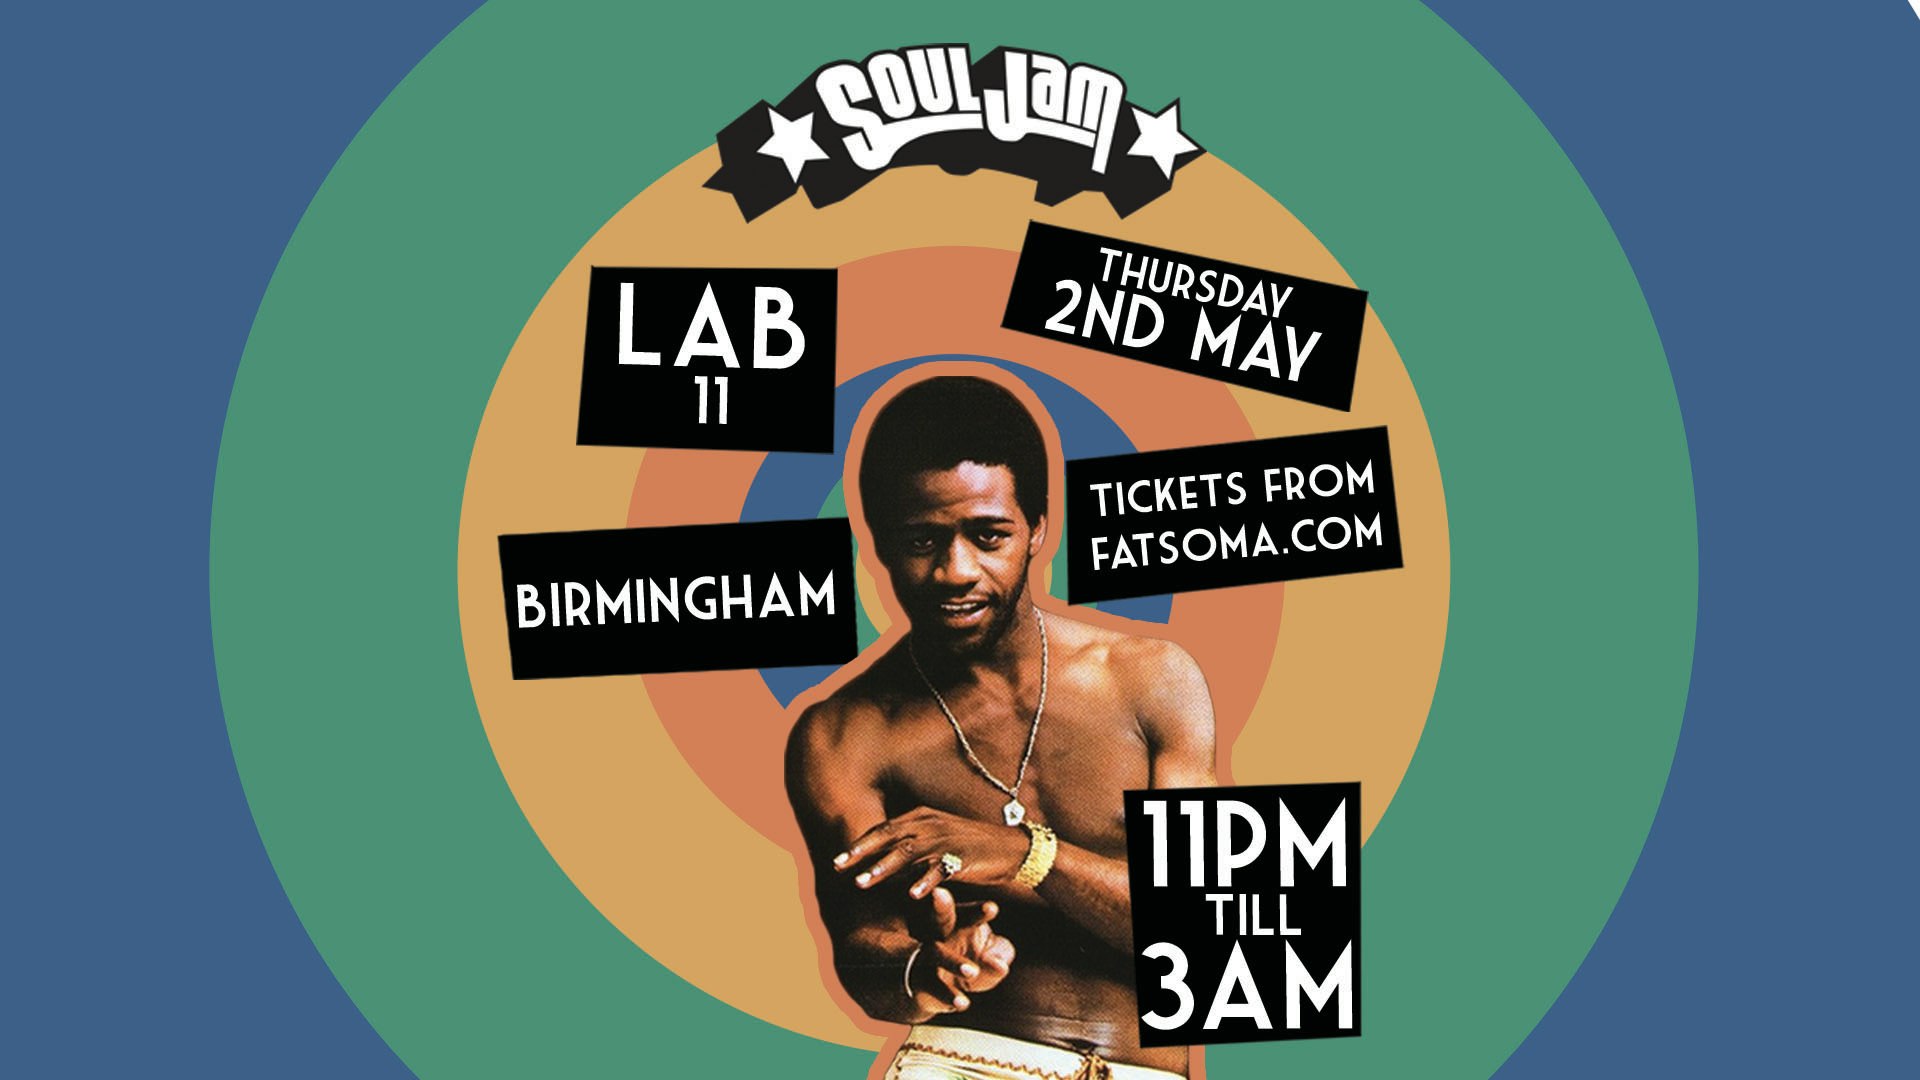 SoulJam | Birmingham | Lab11 | The funkiest party returns!